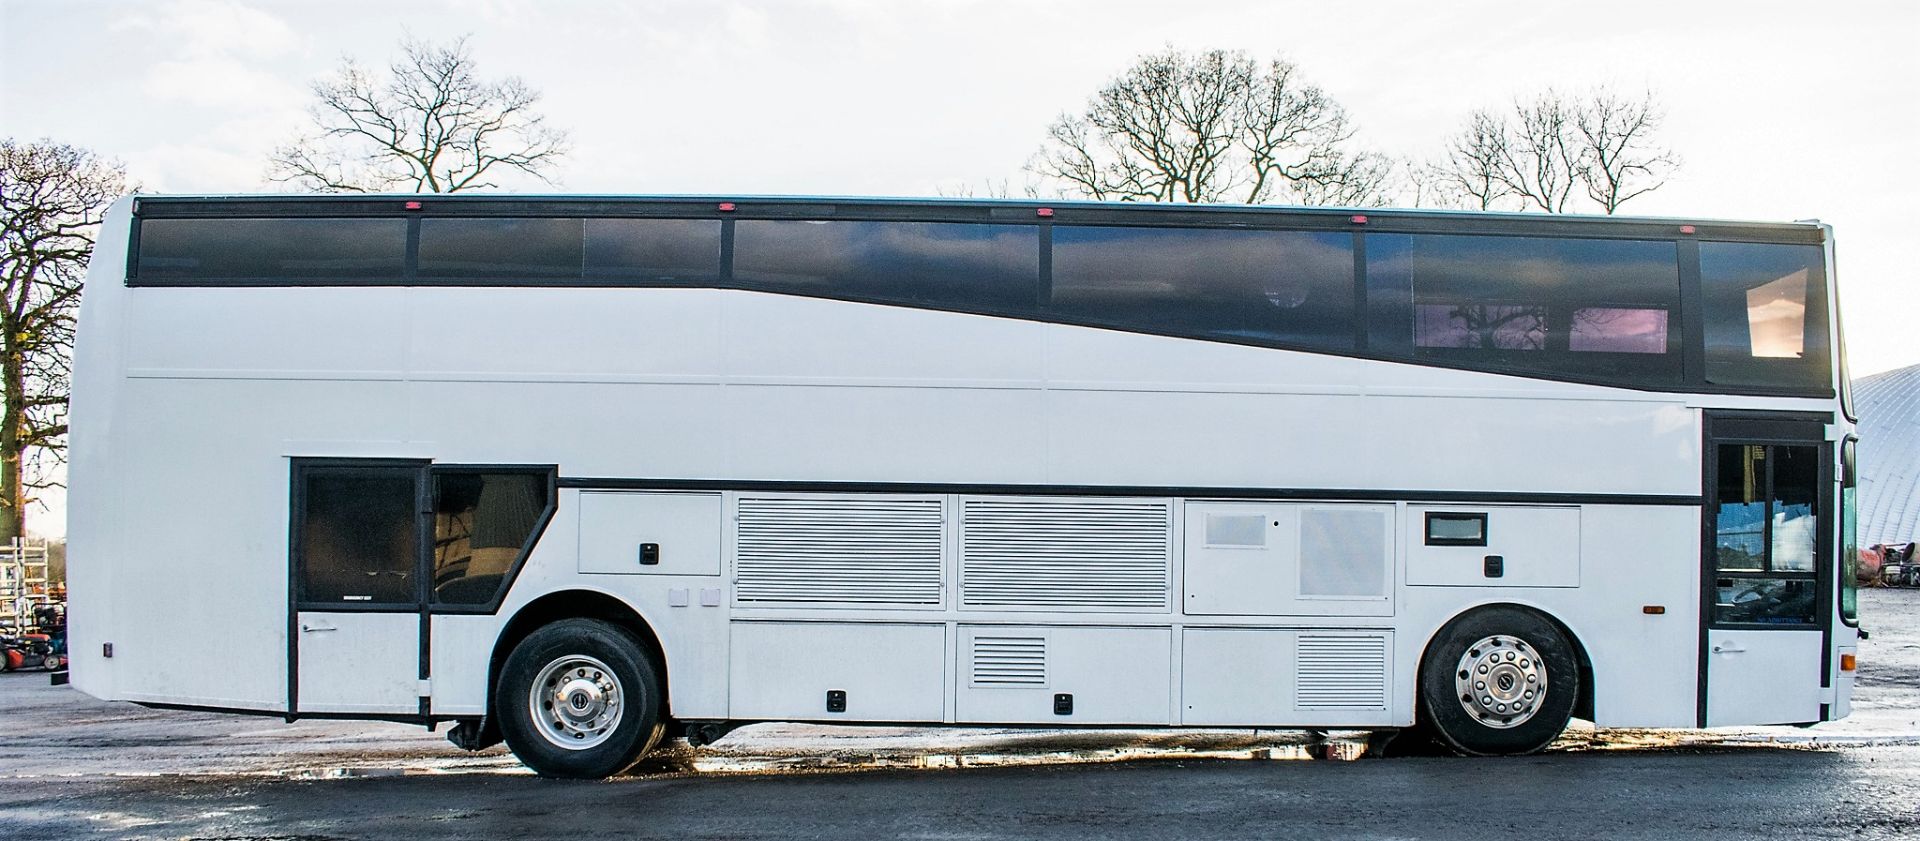 Vanhool double decker luxury tour coach Registration Number: DIB 2061 Date of Registration: 10/06/ - Image 8 of 24